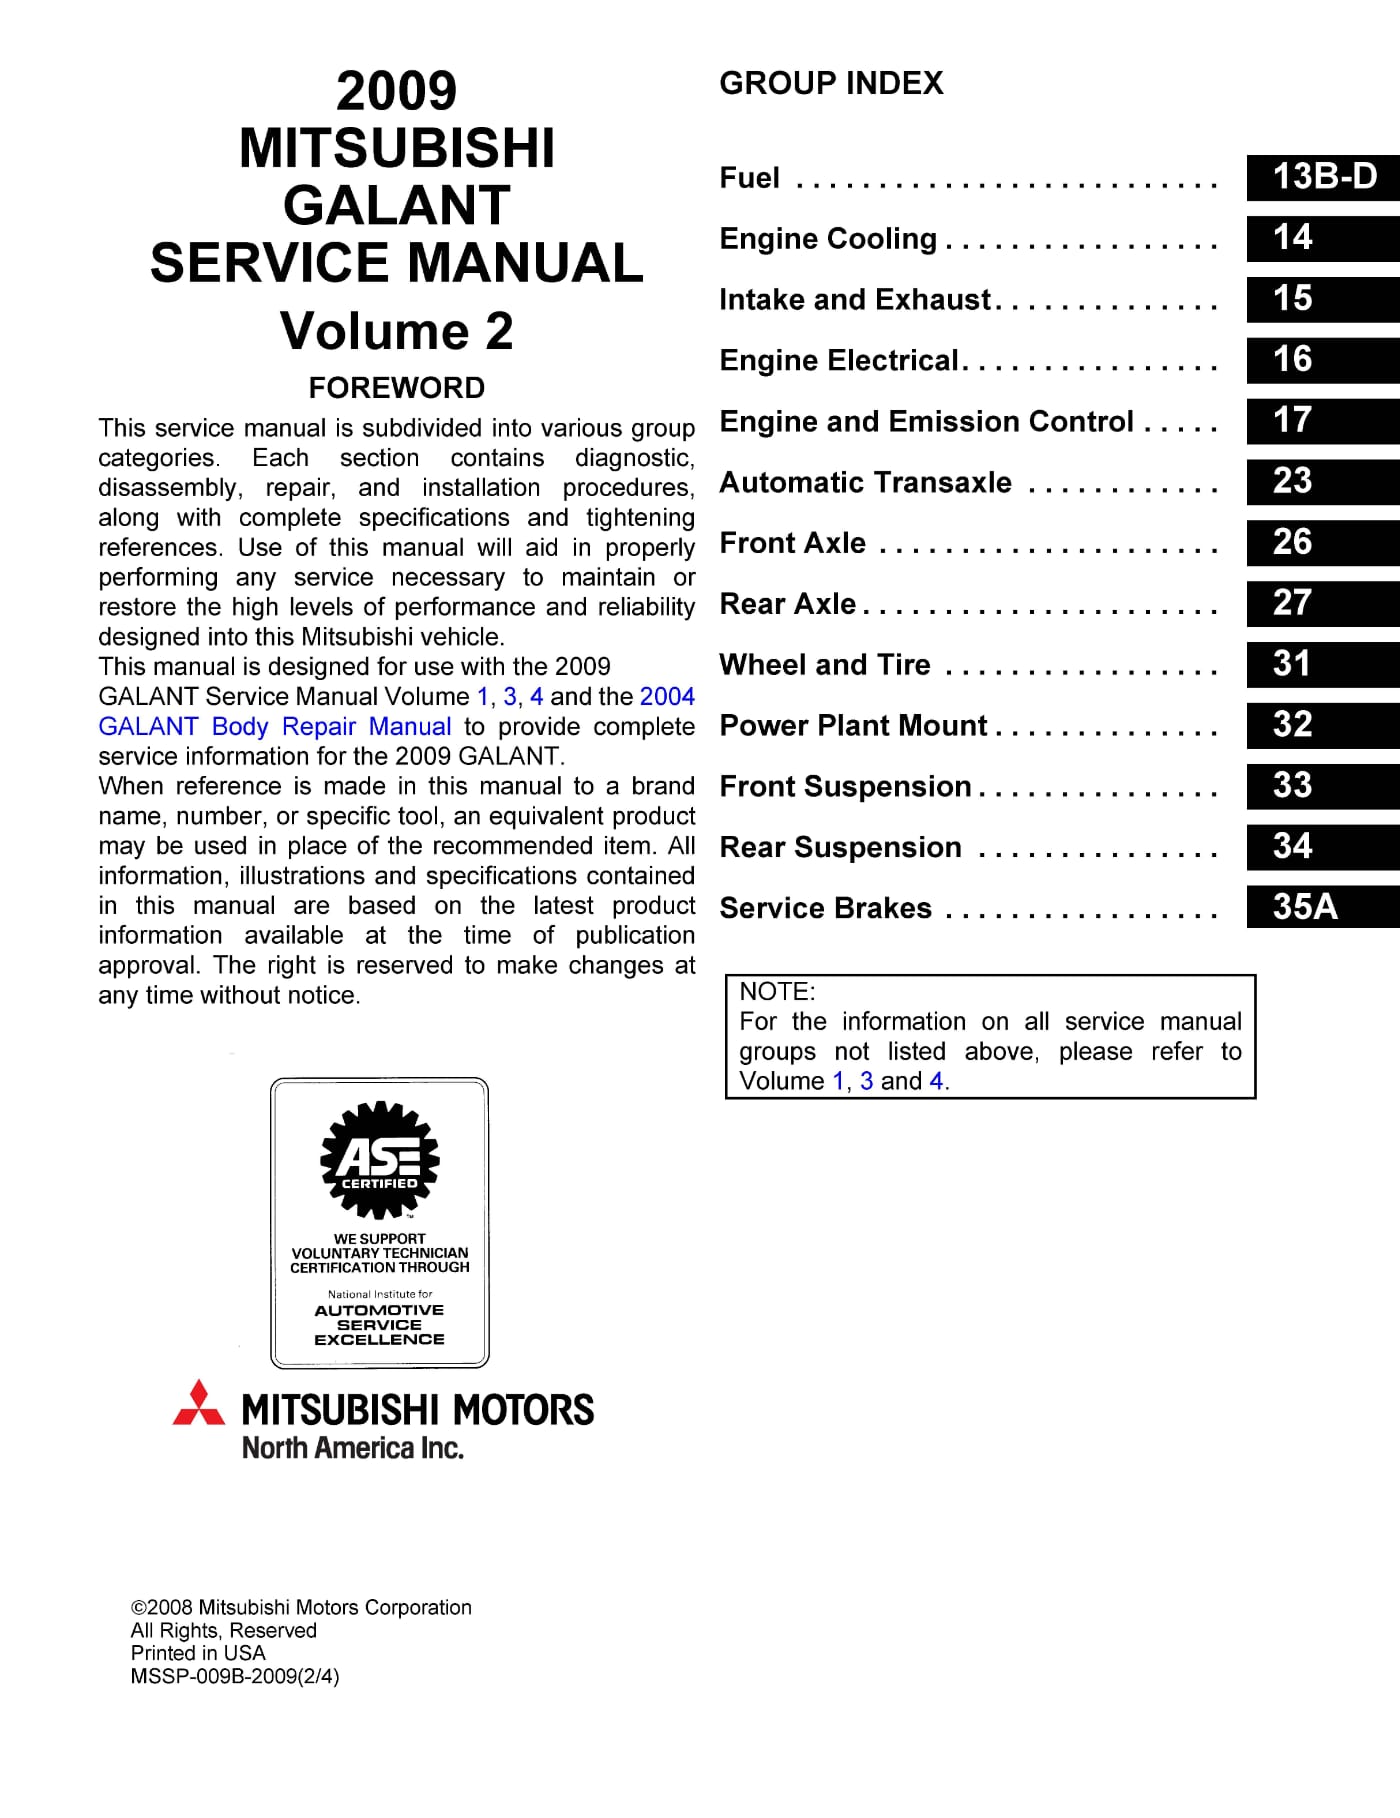 Table of Contents 2009-2012 Mitsubishi Galant Repair Manual - Volume 2